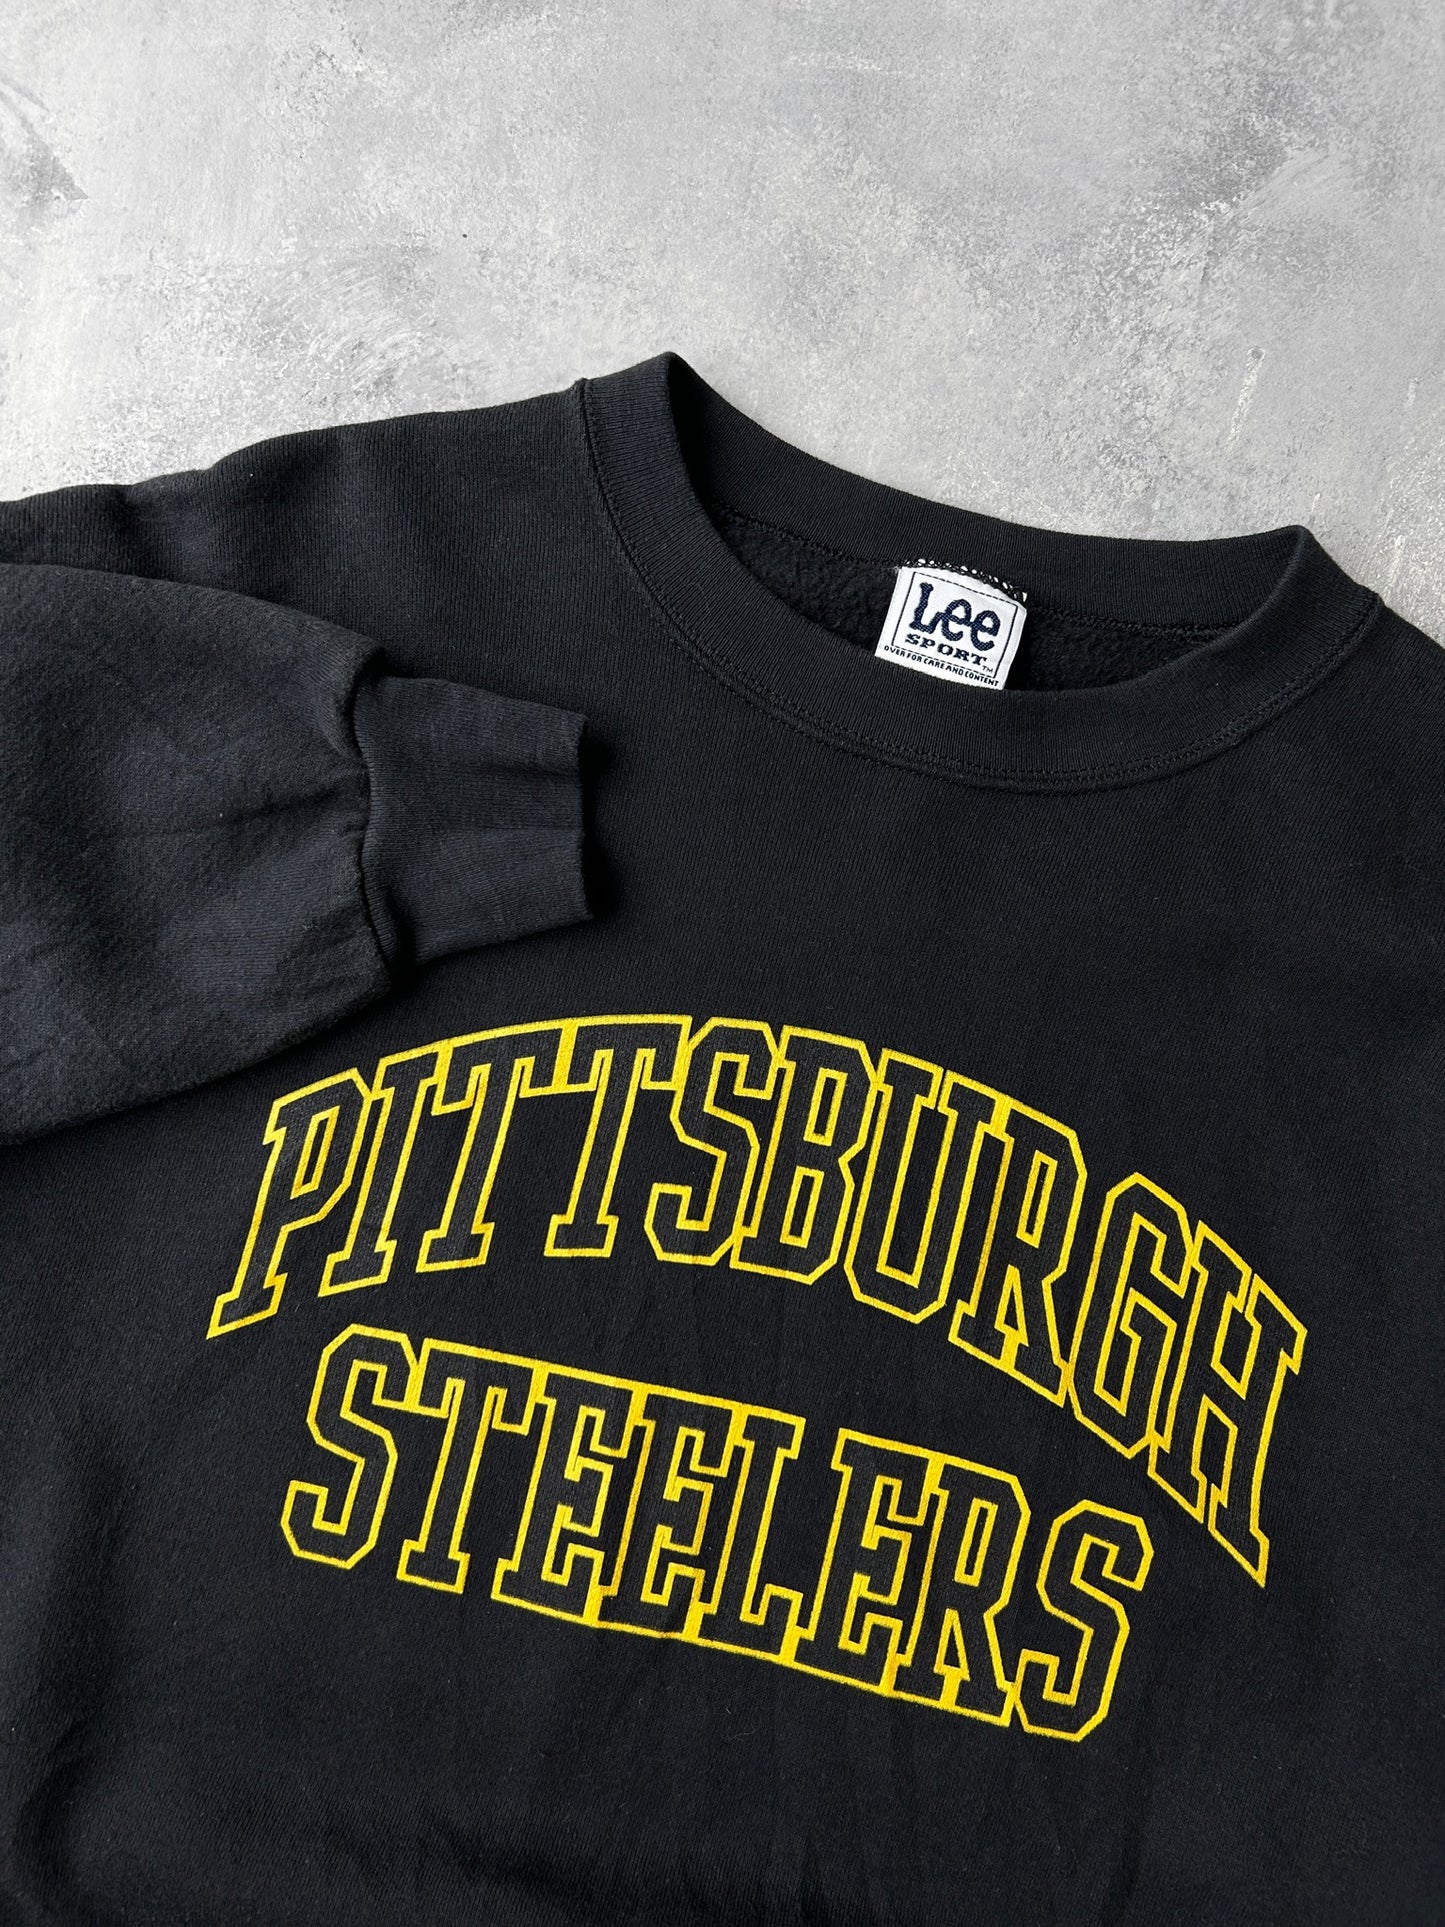 Pittsburgh Steelers Sweatshirt 90's - Large